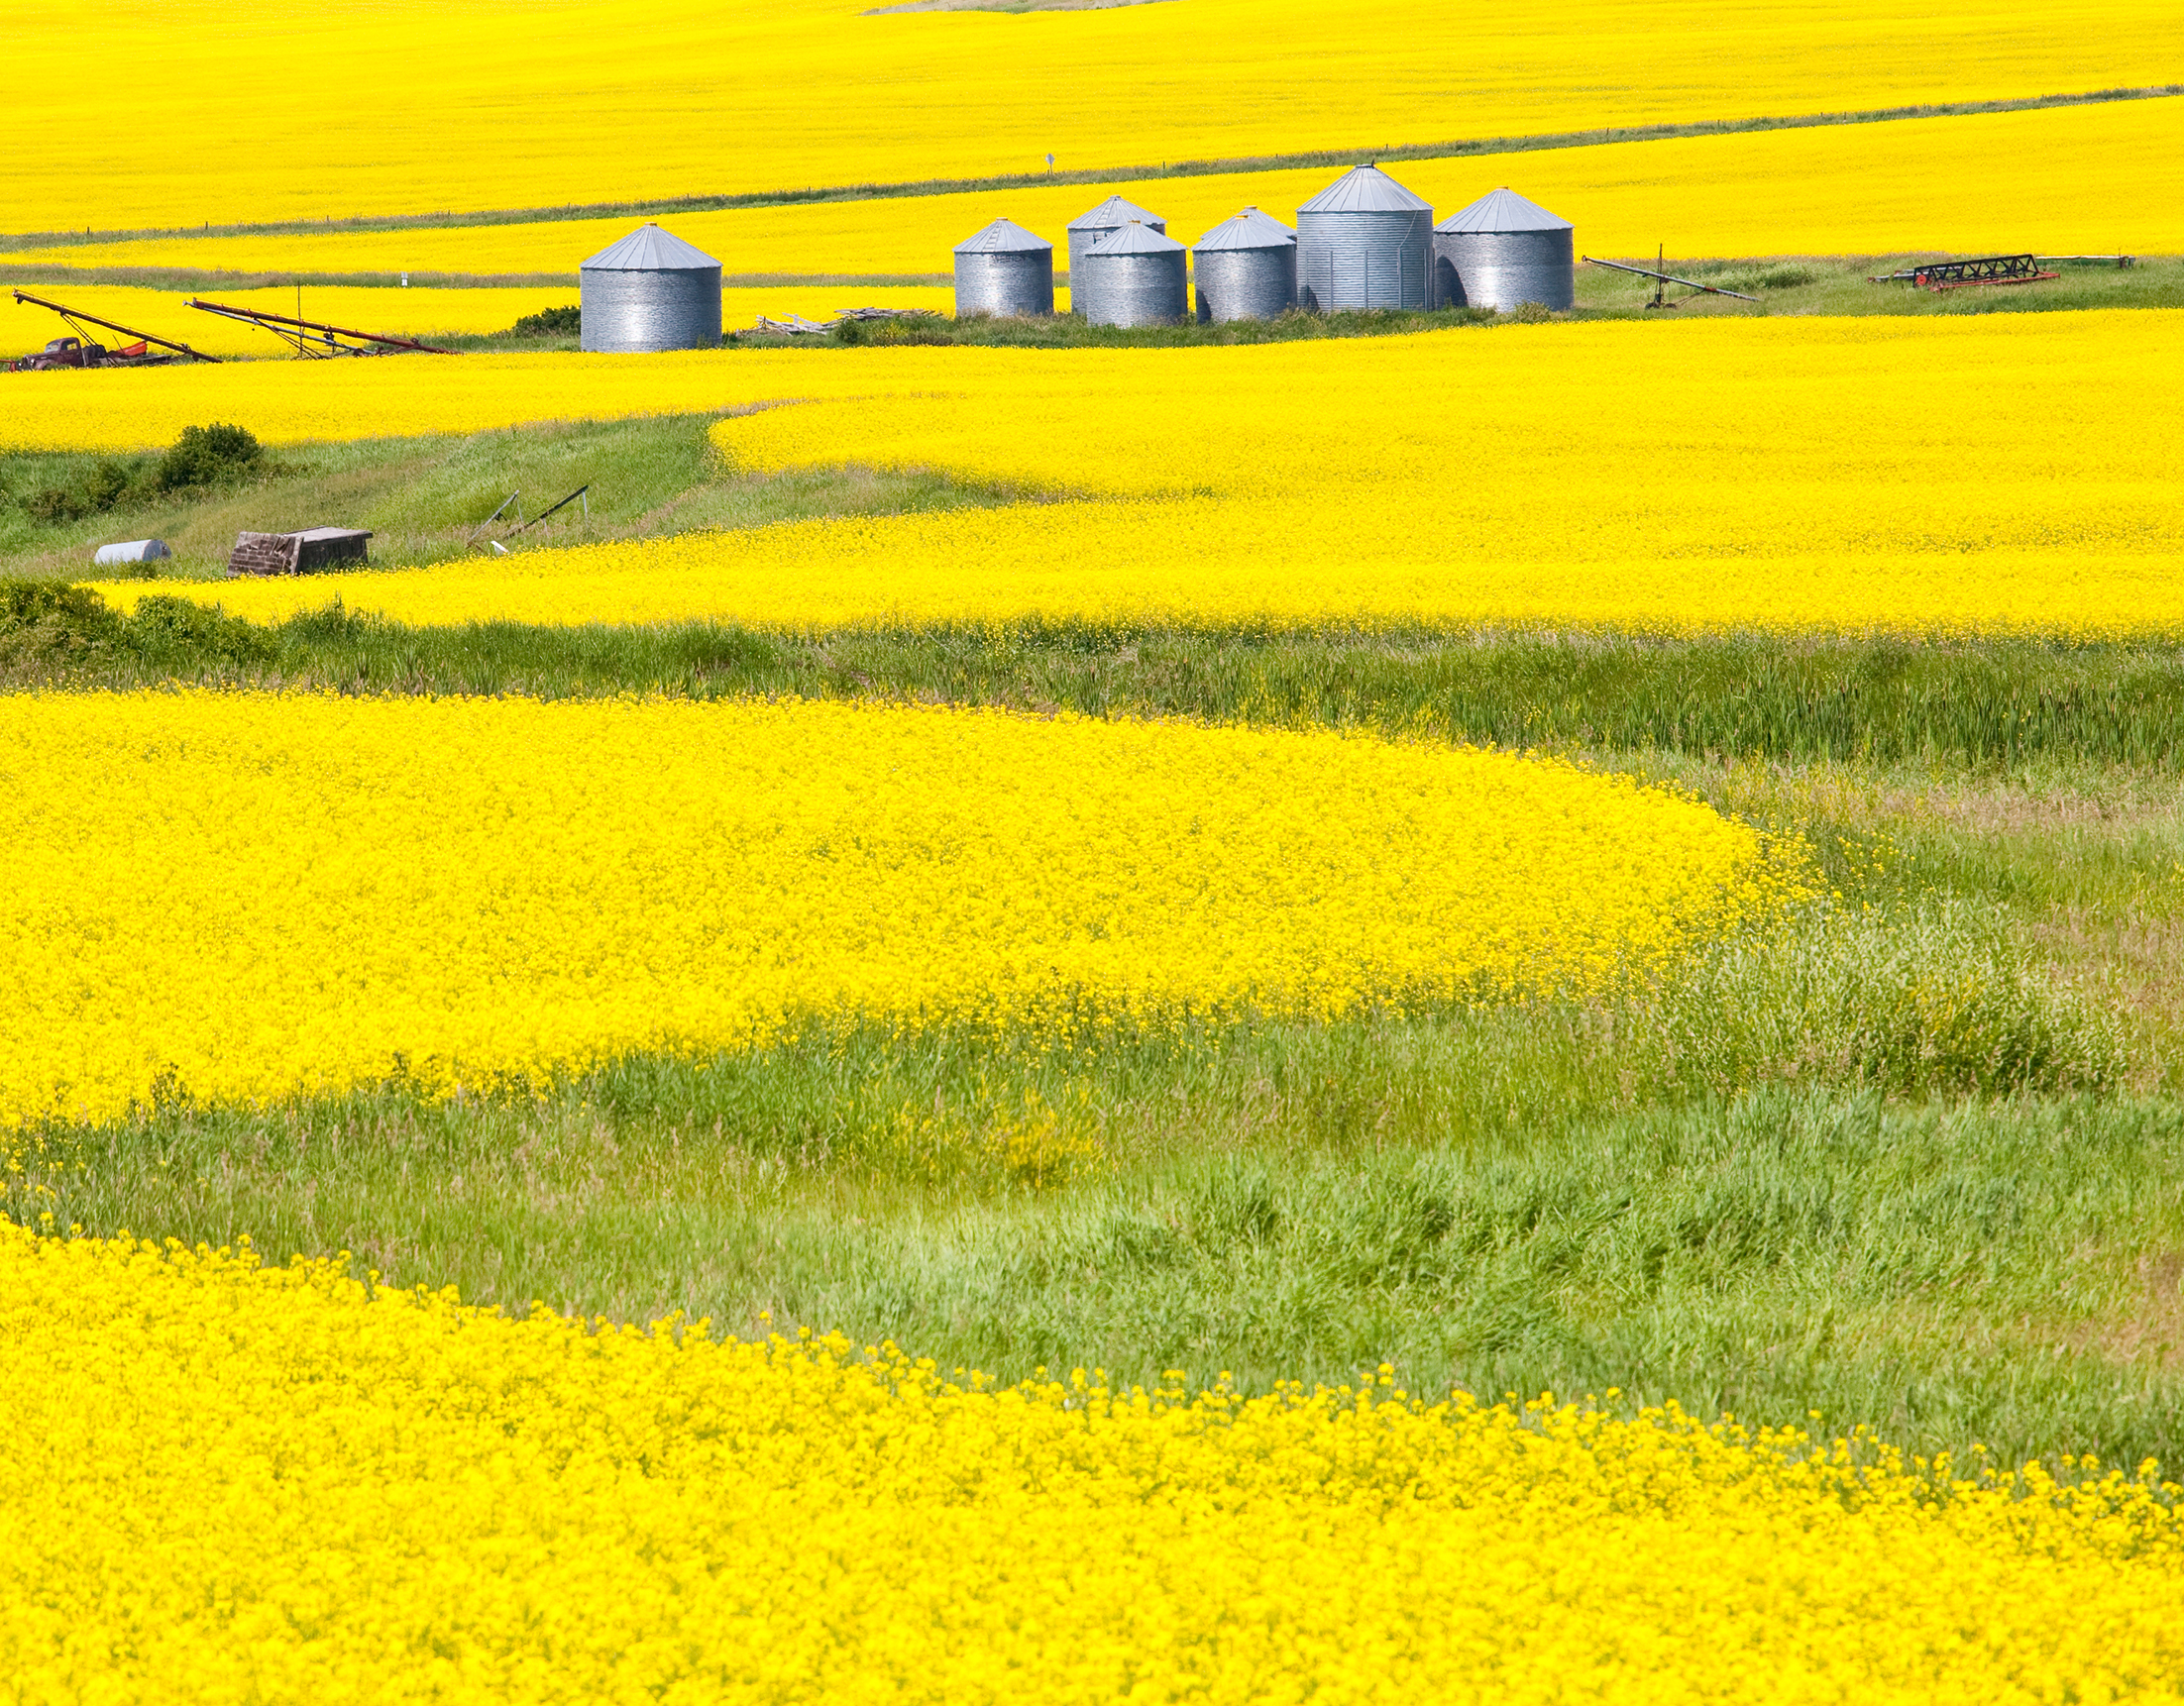 A canola or rapeseed field on the prairie. Alberta, Canada